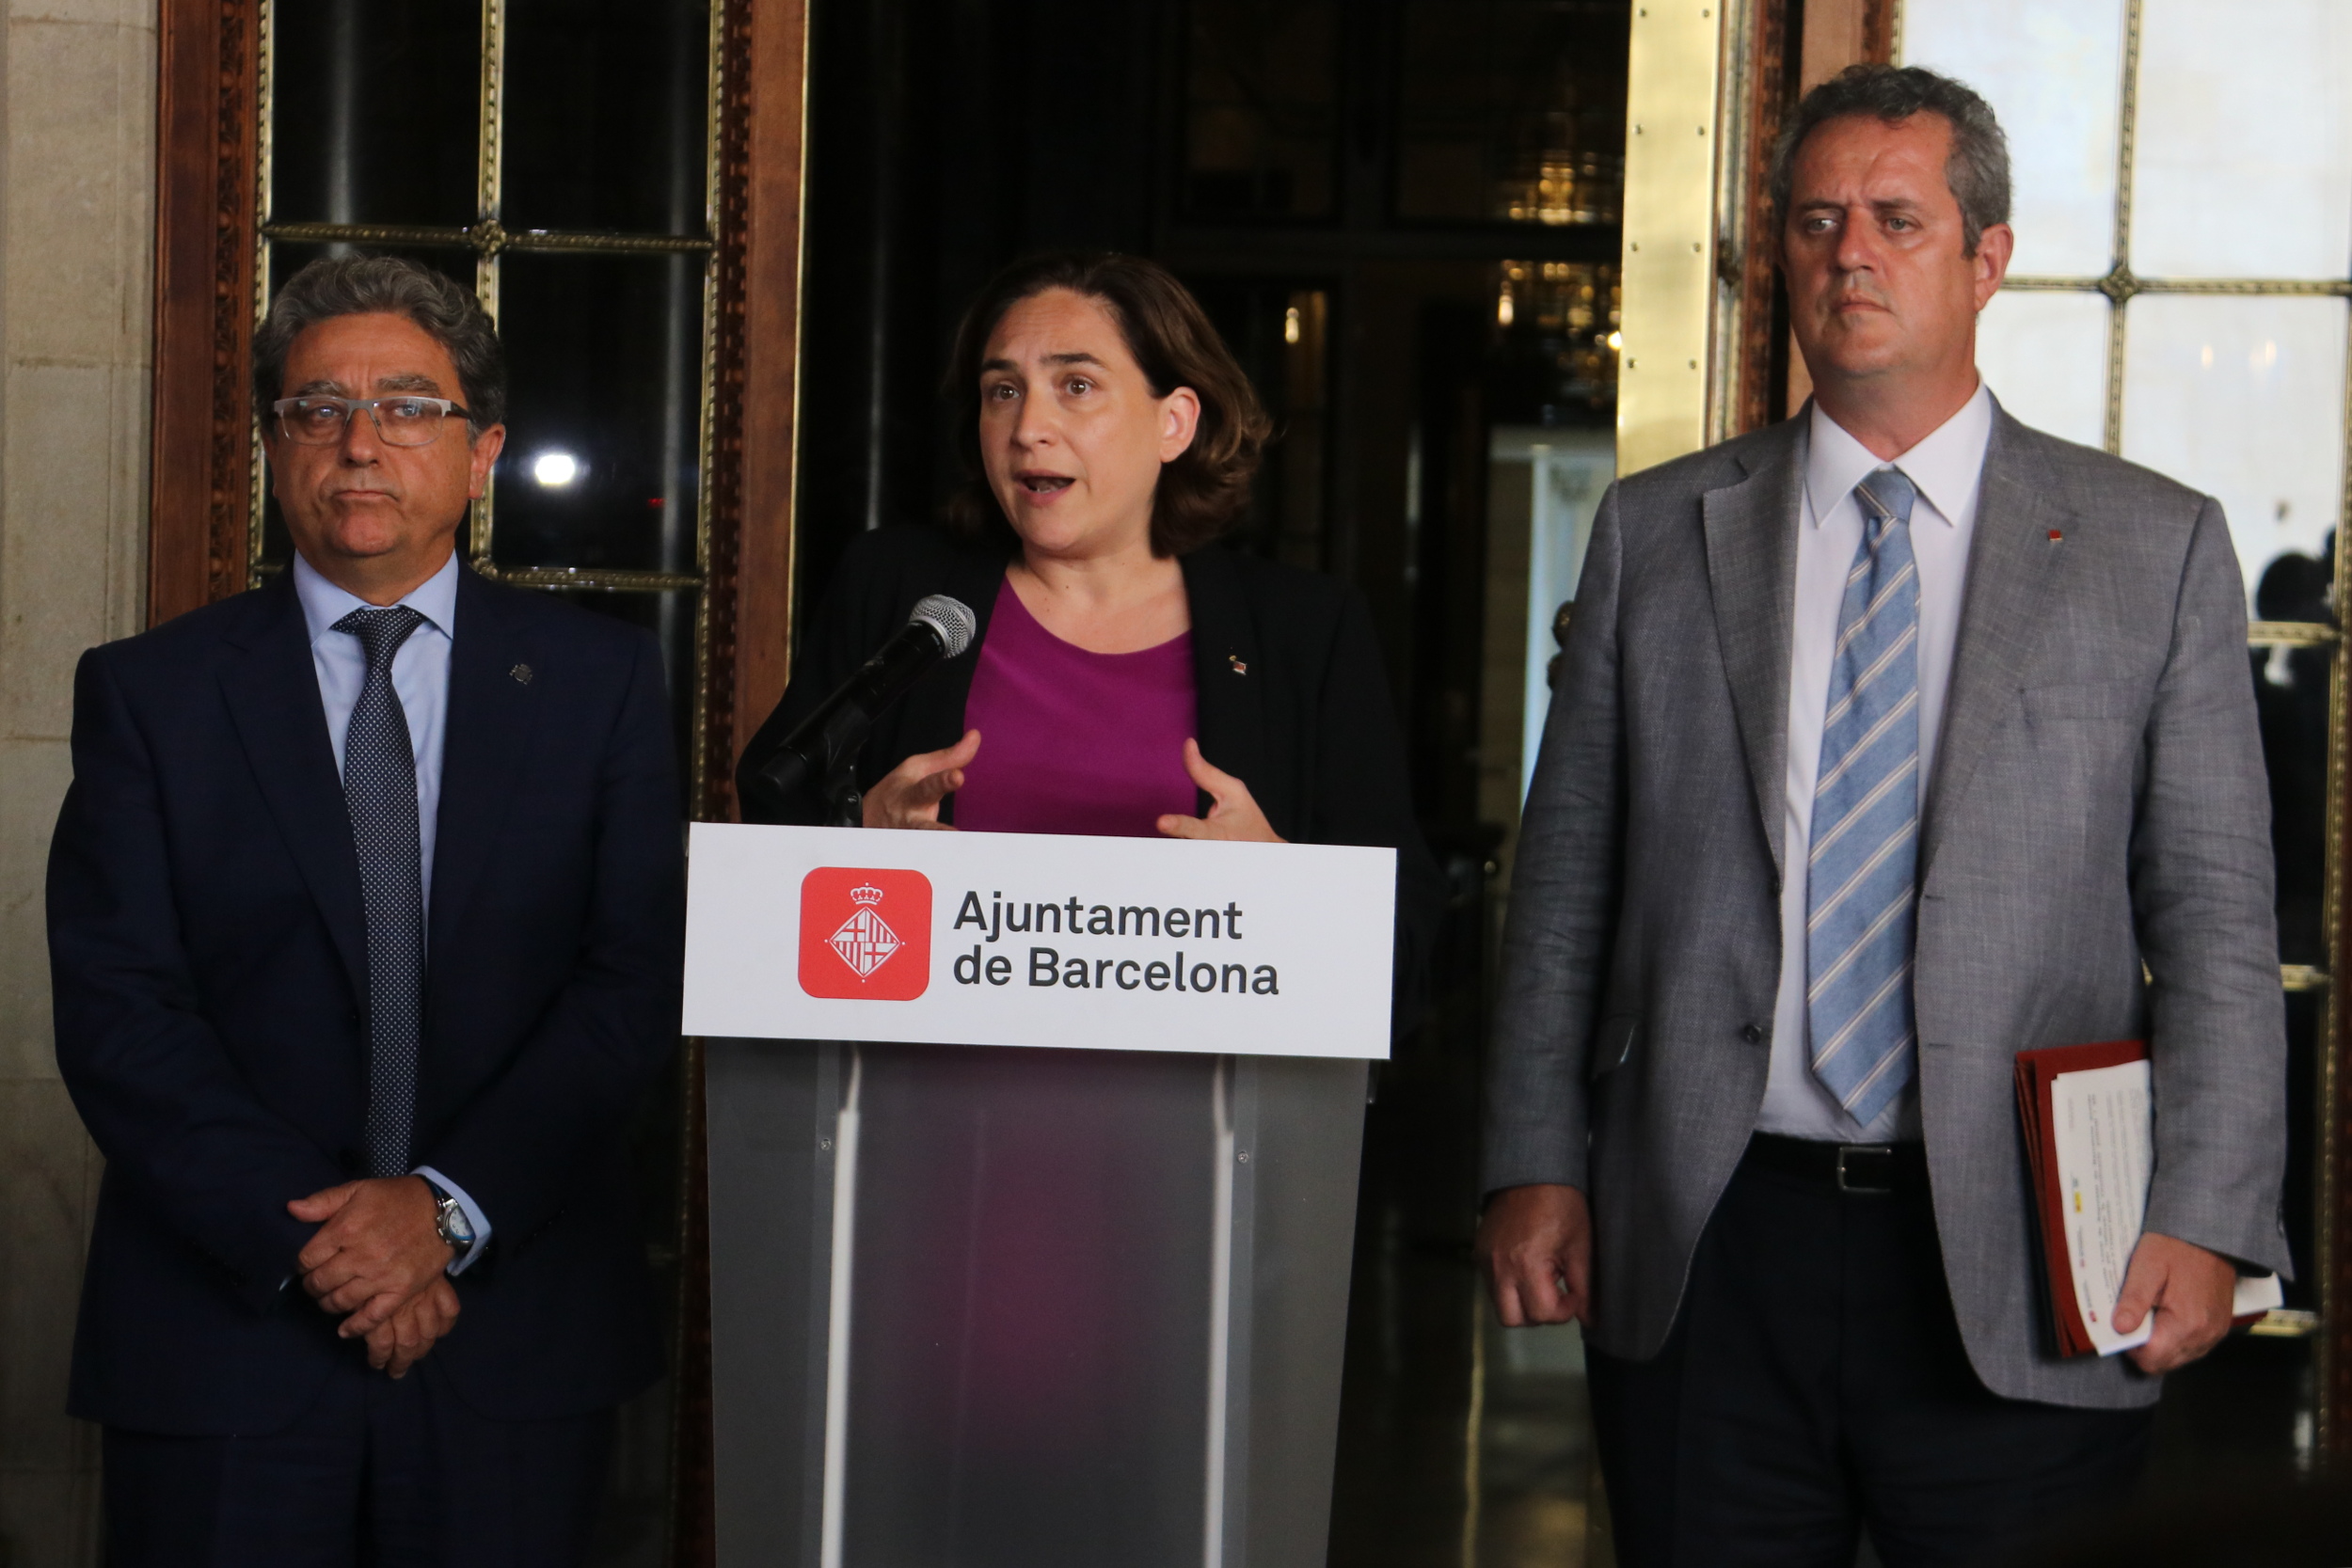 Barcelona mayor Ada Colau announced the measures on Wednesday morning